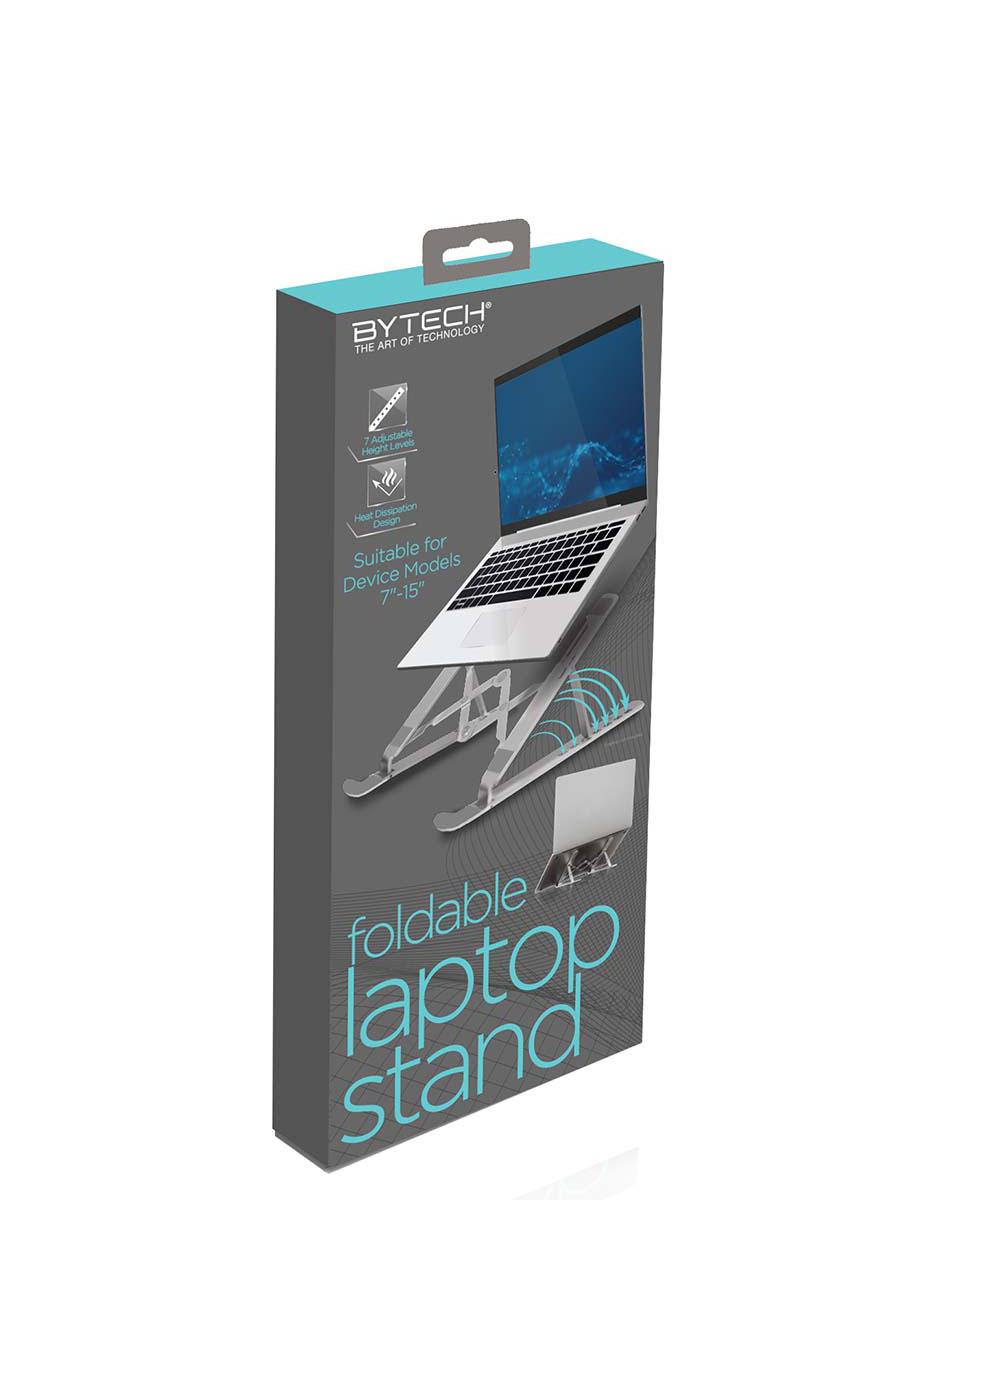 Bytech Foldable Laptop Stand; image 1 of 2